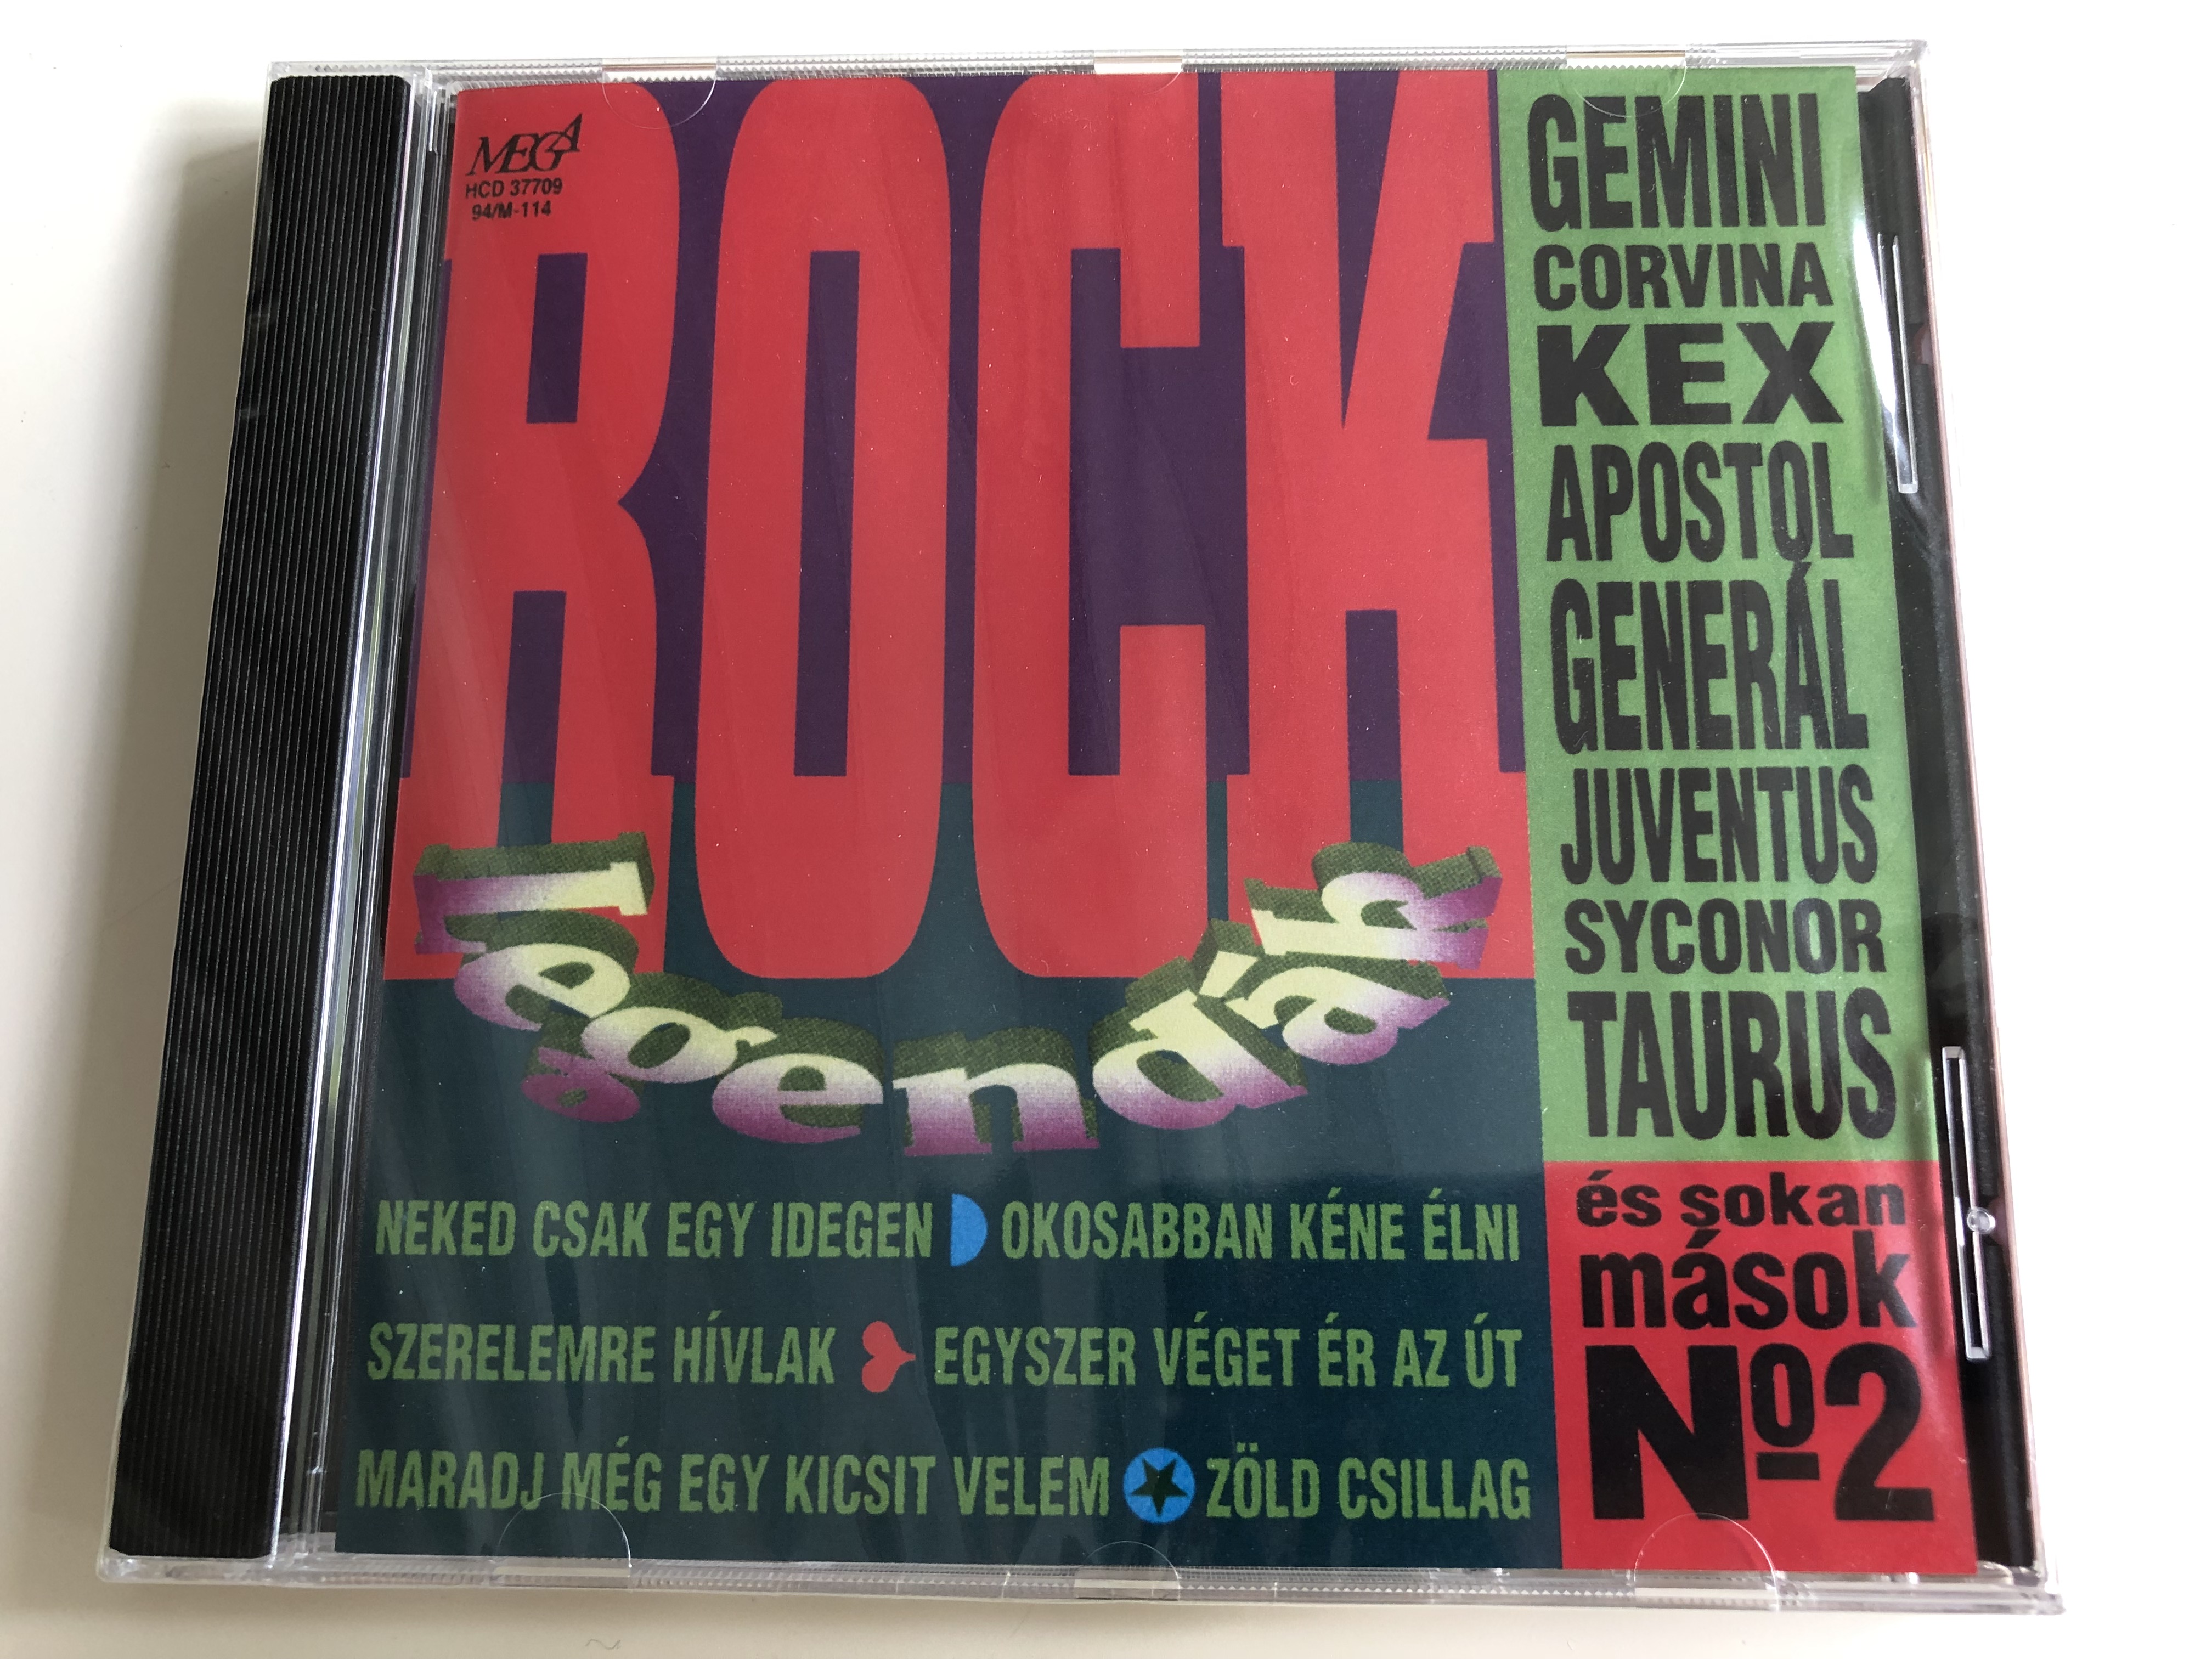 rock-legend-k-no.-2-gemini-corvina-kex-apostol-gener-l-juventus-syconor-taurus-audio-cd-hcd-37709-hungarian-rock-legends-1-.jpg